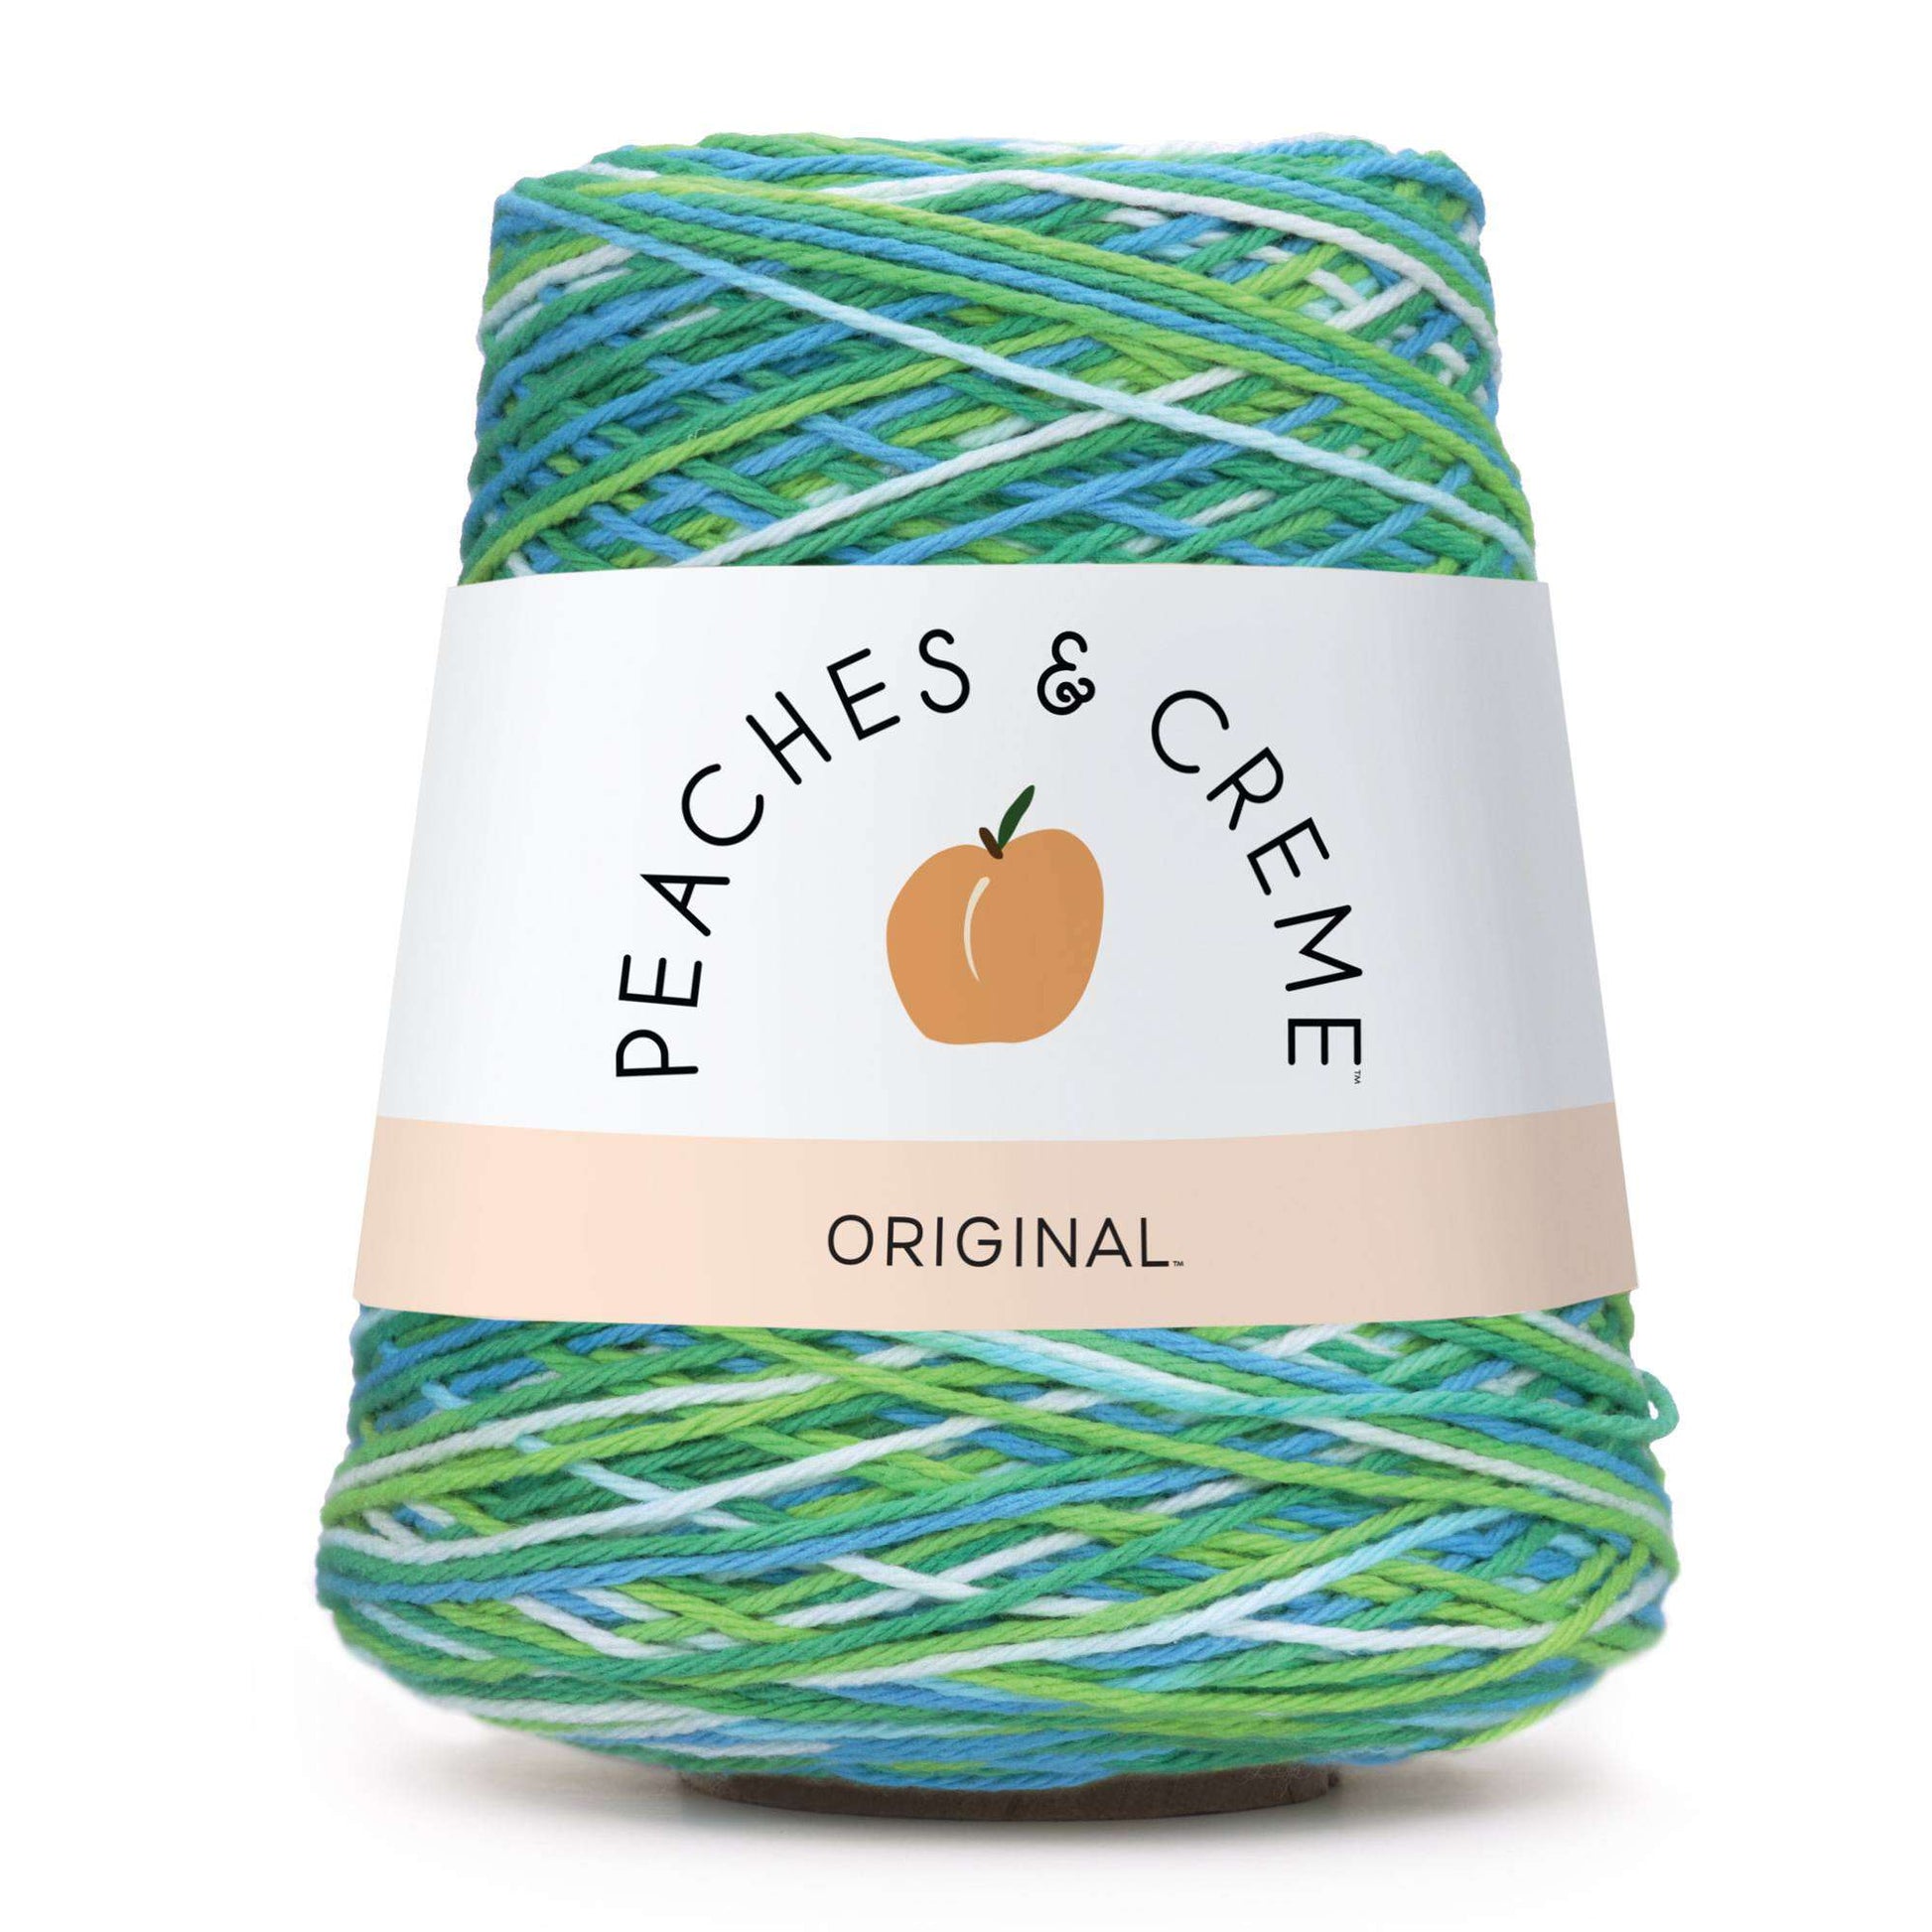 Peaches & Crème Cones Yarn